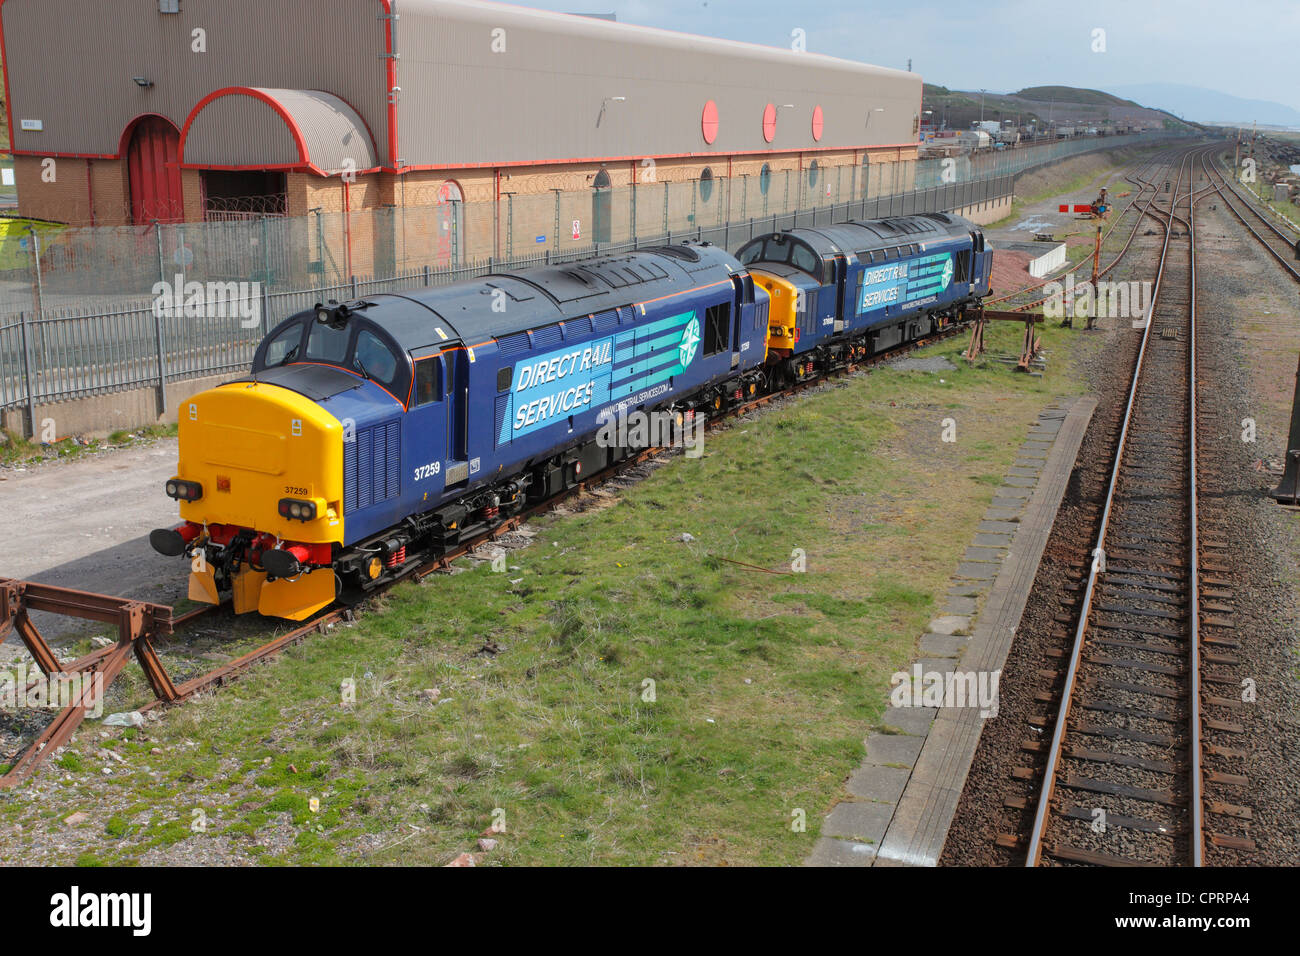 Services ferroviaires directes, train, moteur, Sellafield, Cumbria Banque D'Images